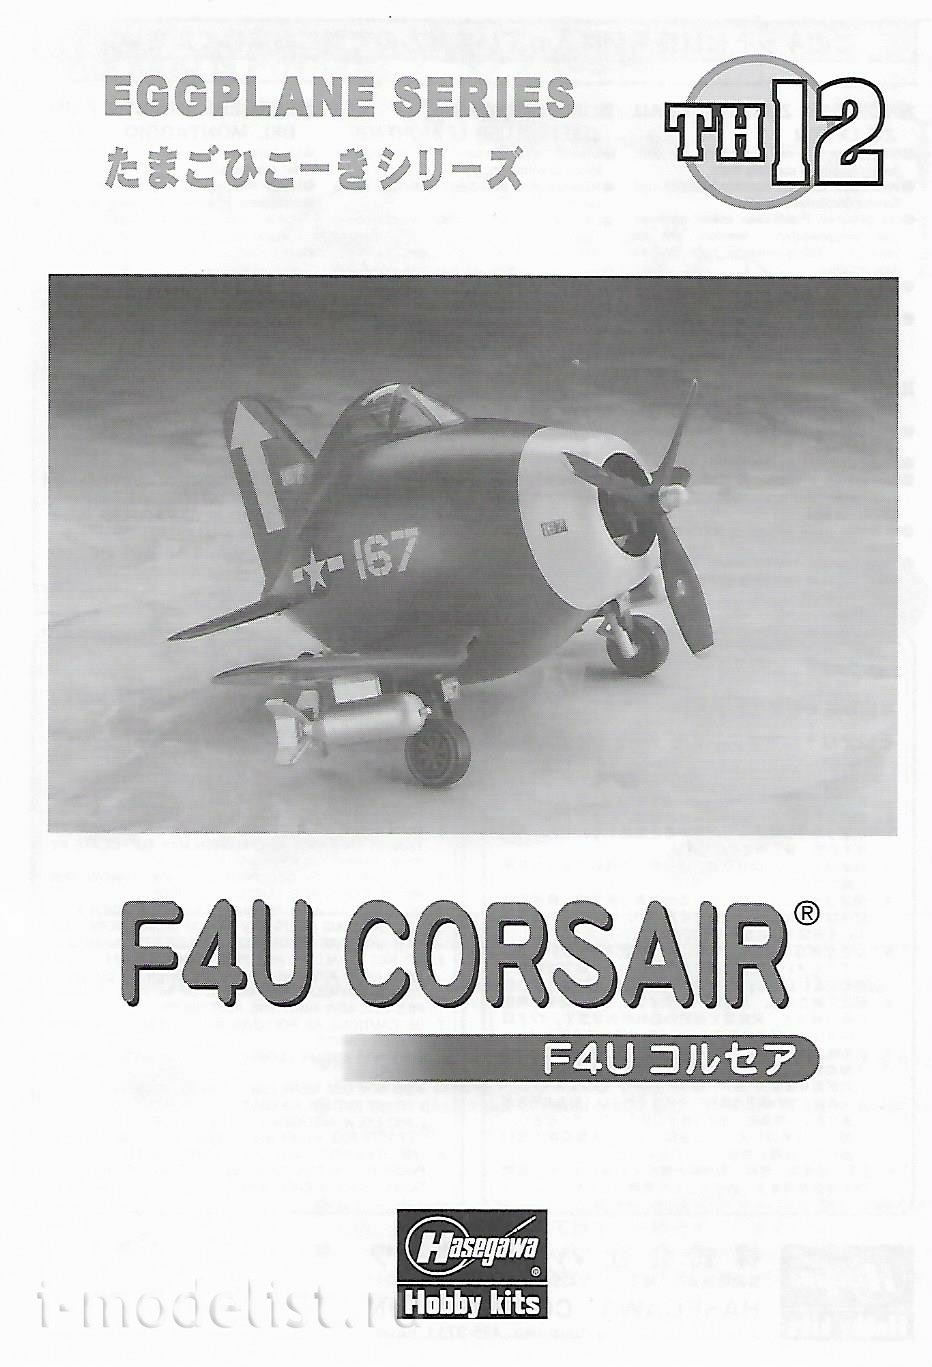 60122 Hasegawa Egg Plane F-4U Corsair Limited Edition